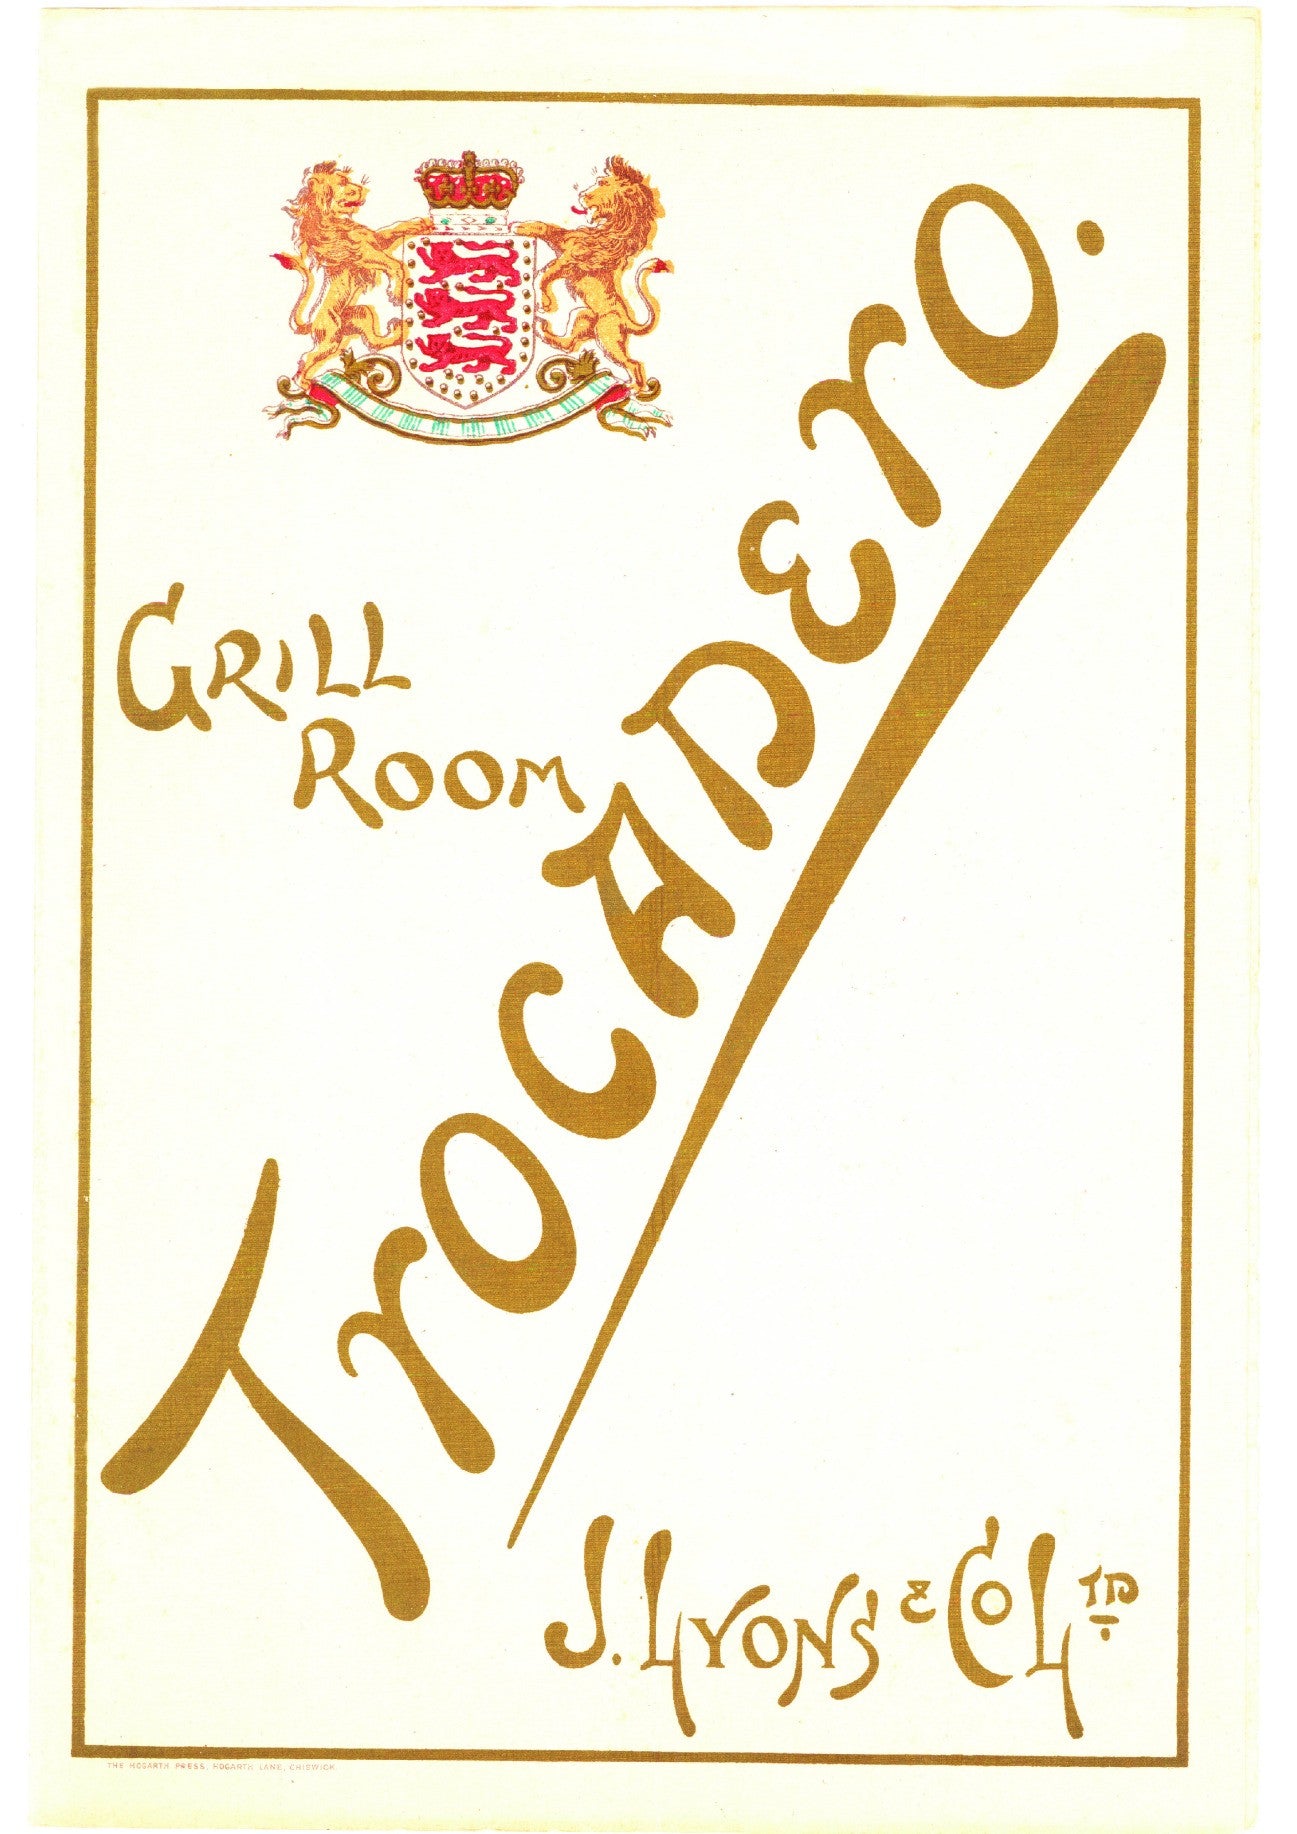 Trocadero Grill Room London 1913